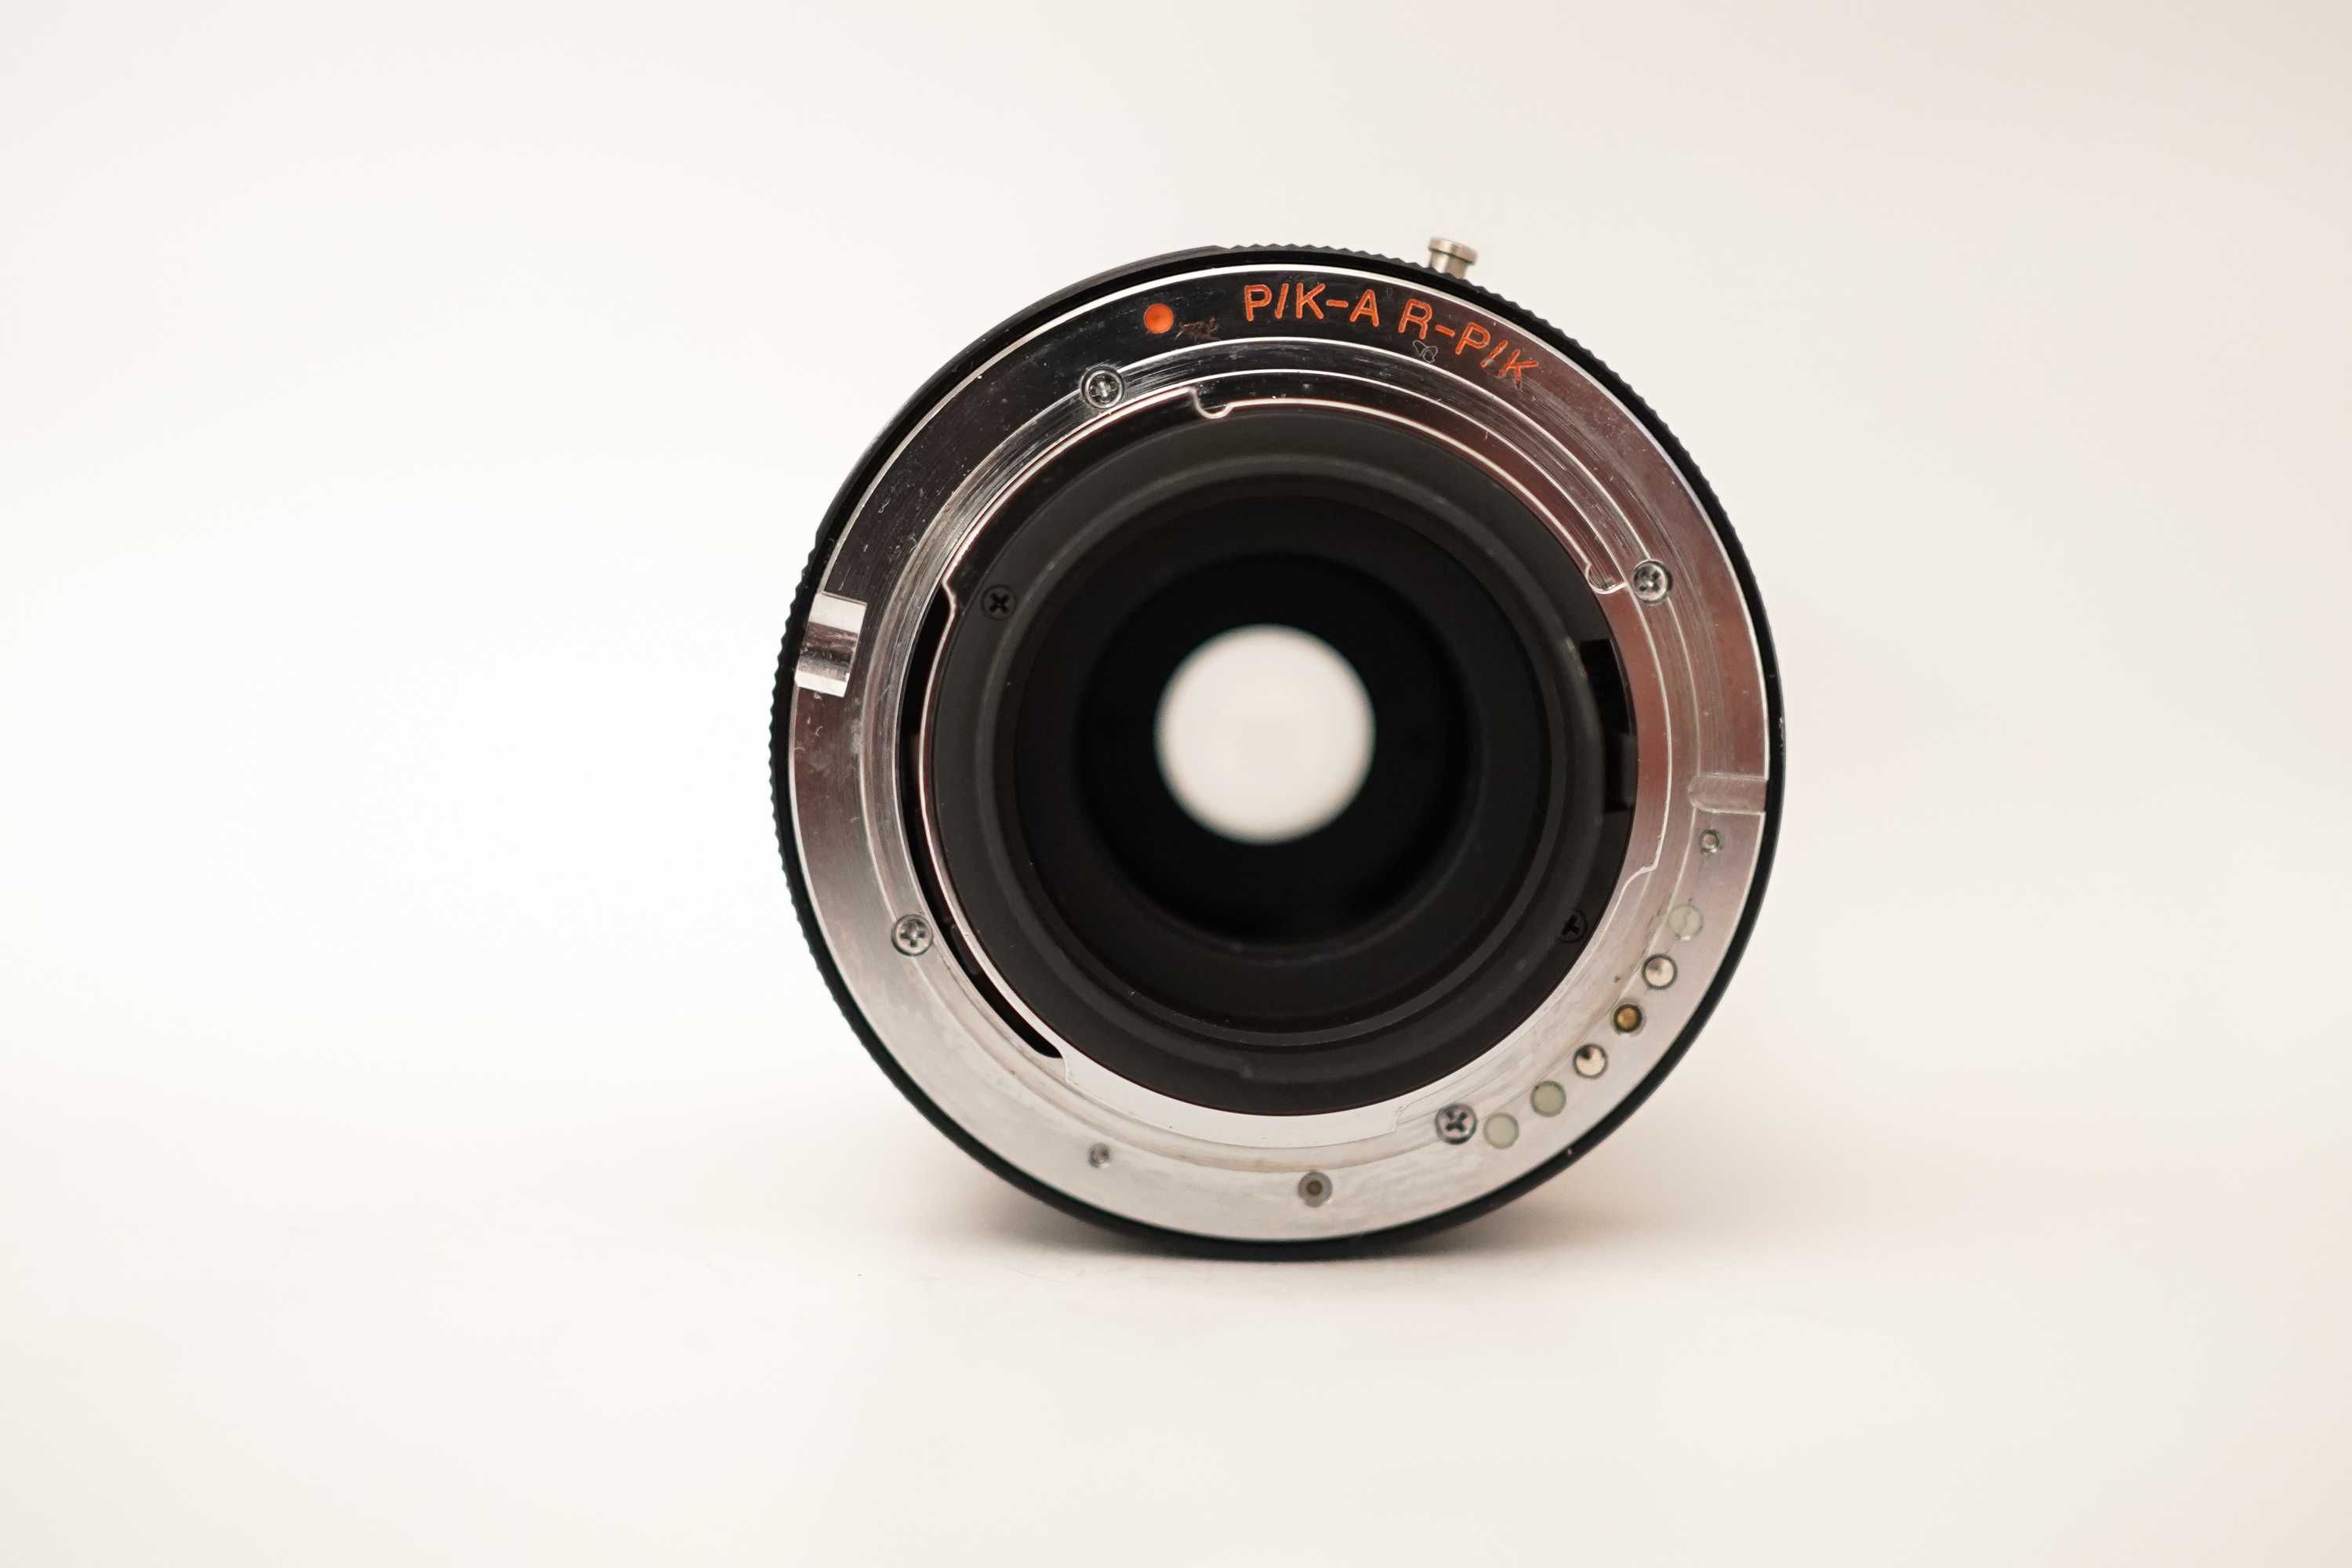 Clubman Zoom Macro 28-70mm f3.9-4.8 - Obiectiv foto Pentax K PK-A